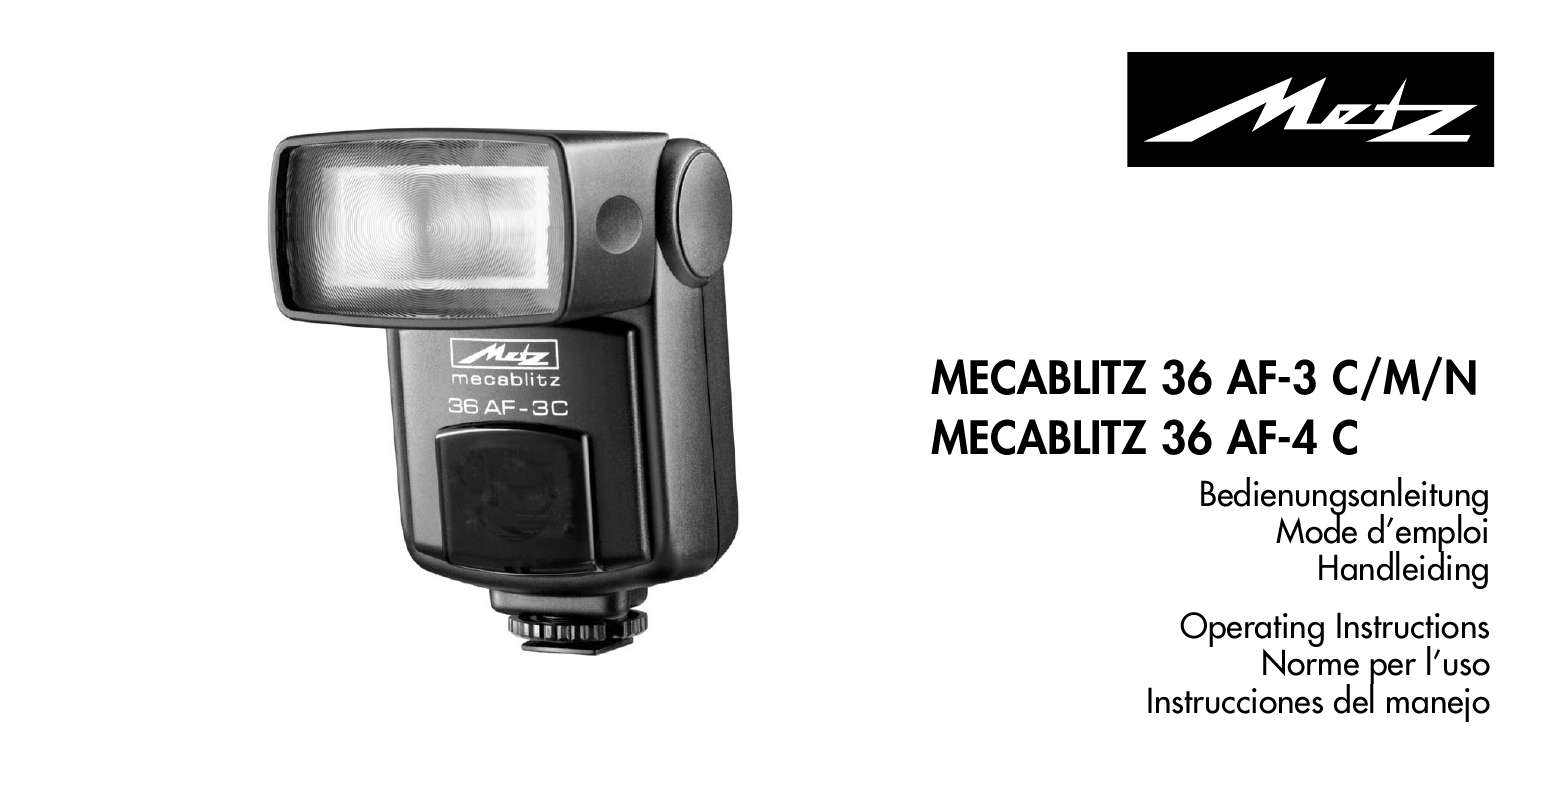 Guide utilisation  METZ MECABLITZ 36 AF-4 C  de la marque METZ